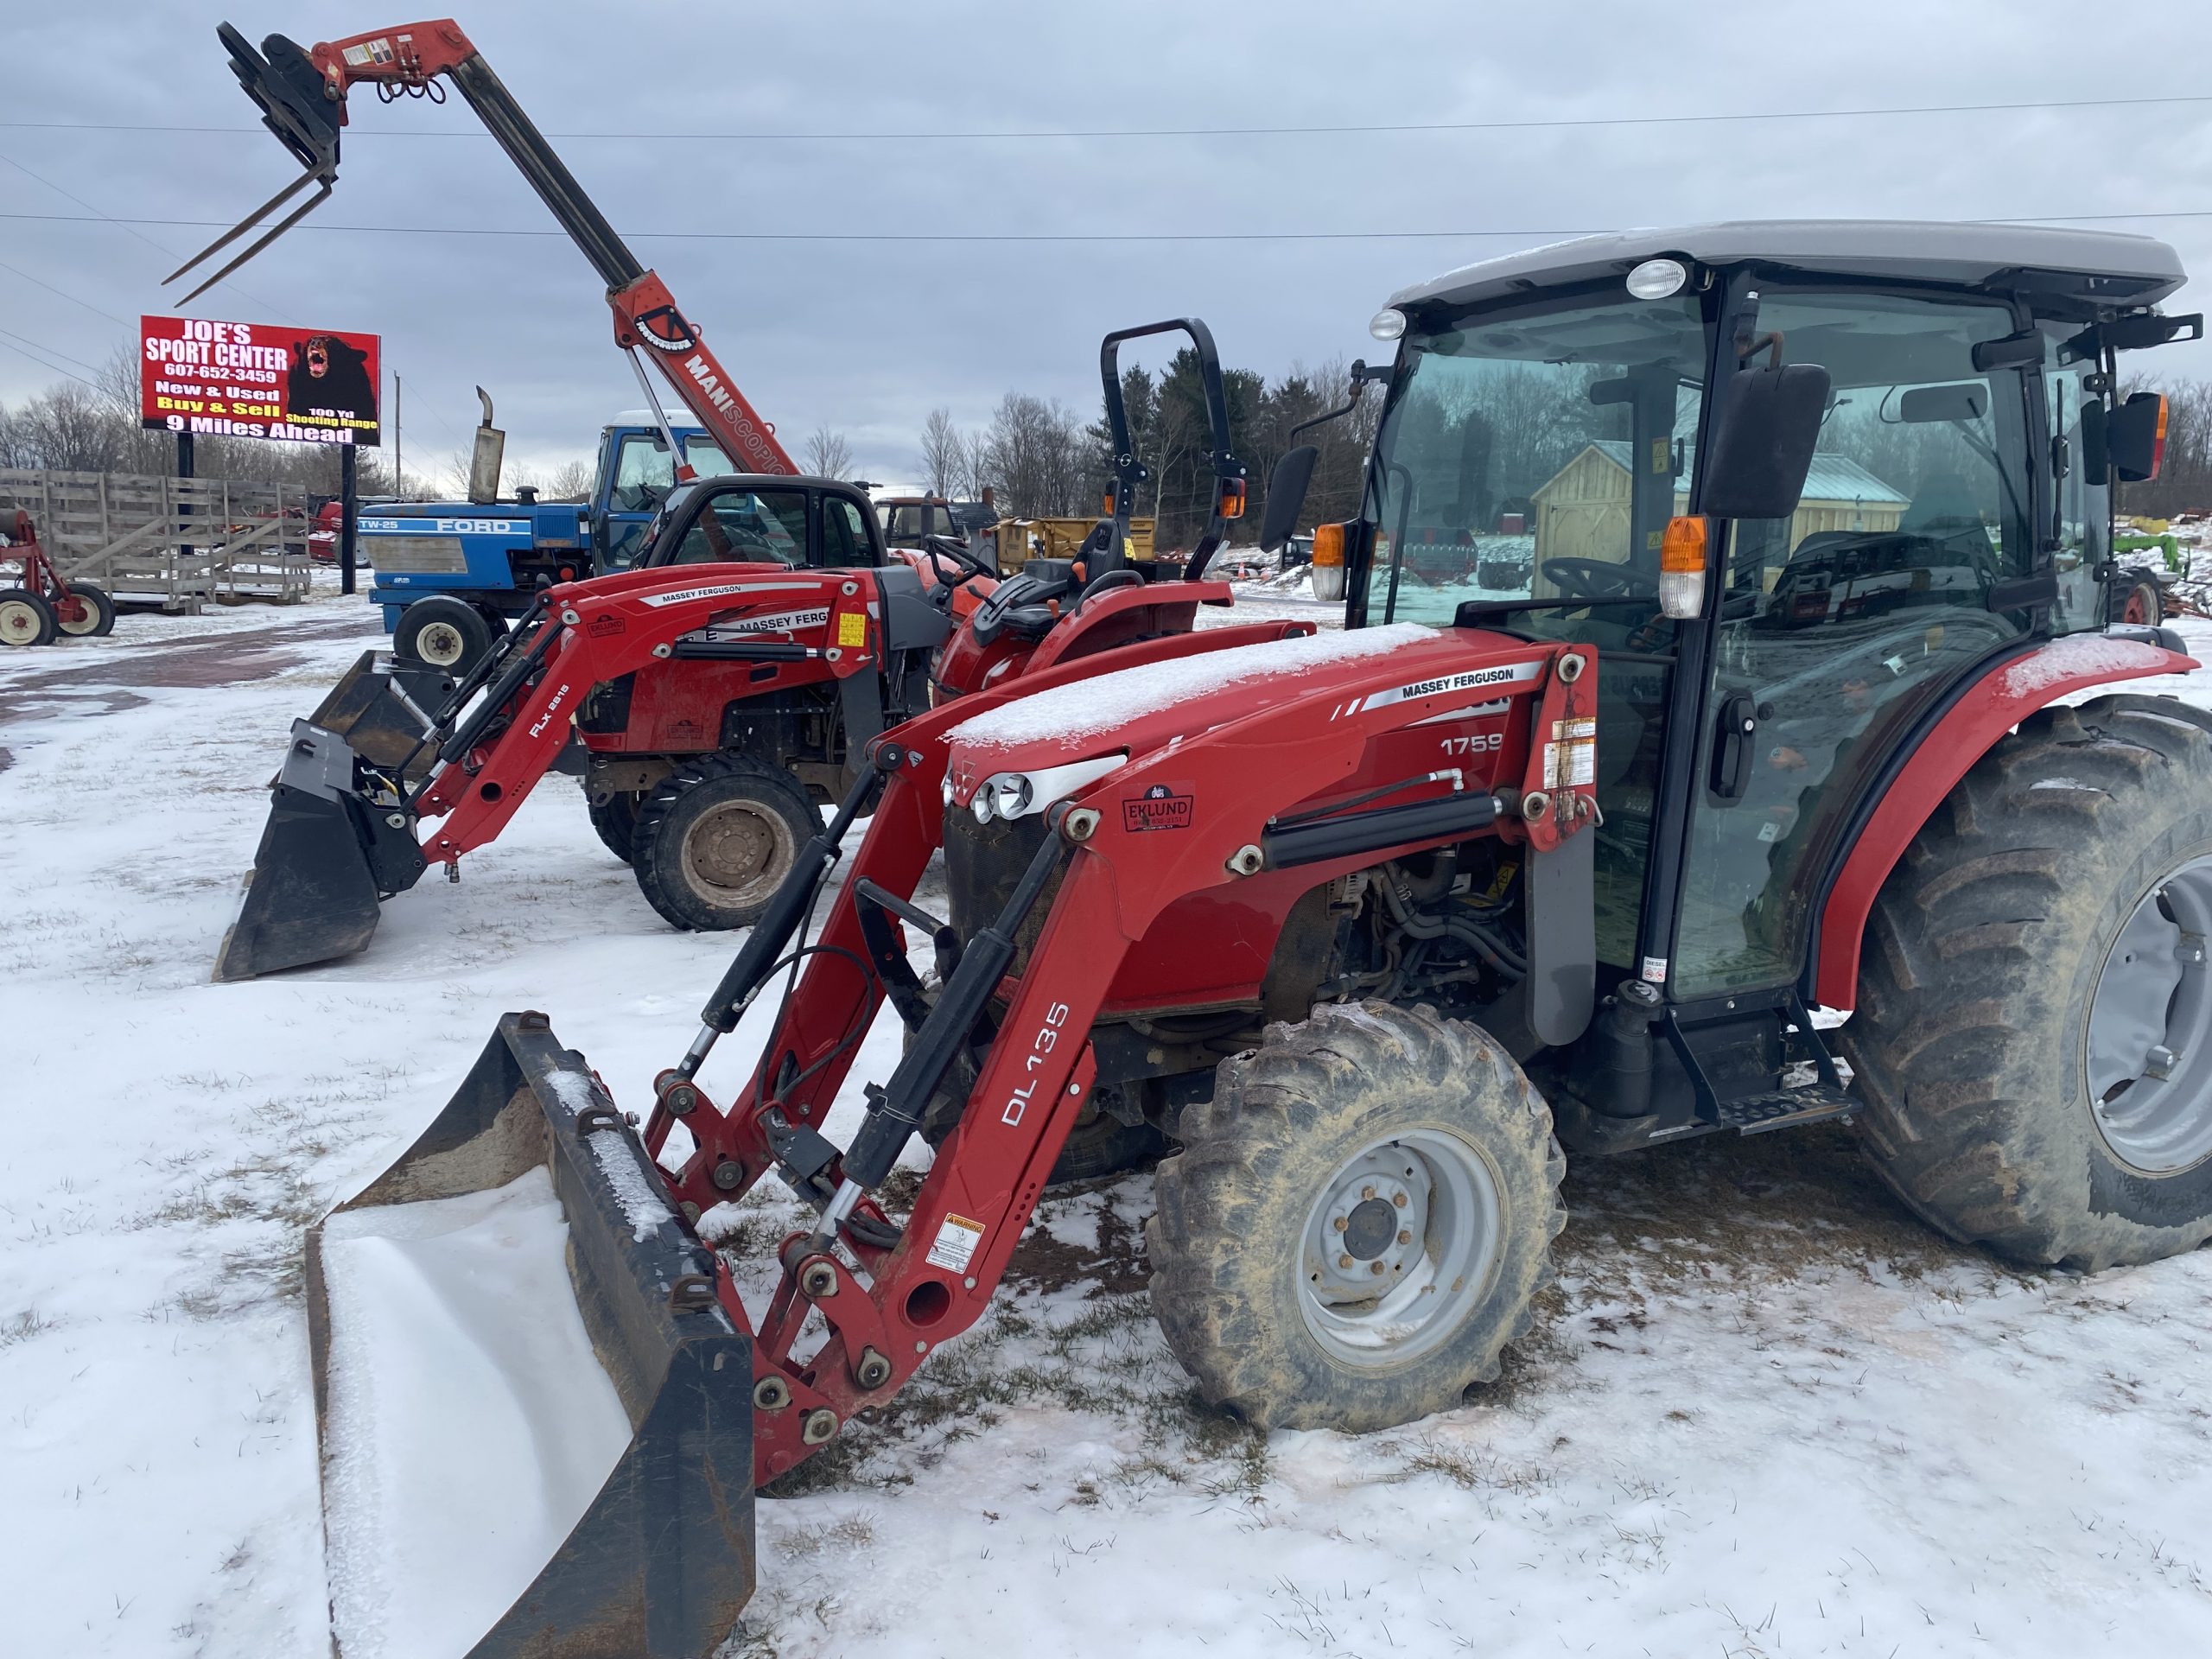 Eklund Farm Machinery Winter Used Equipment + Consignment Auction